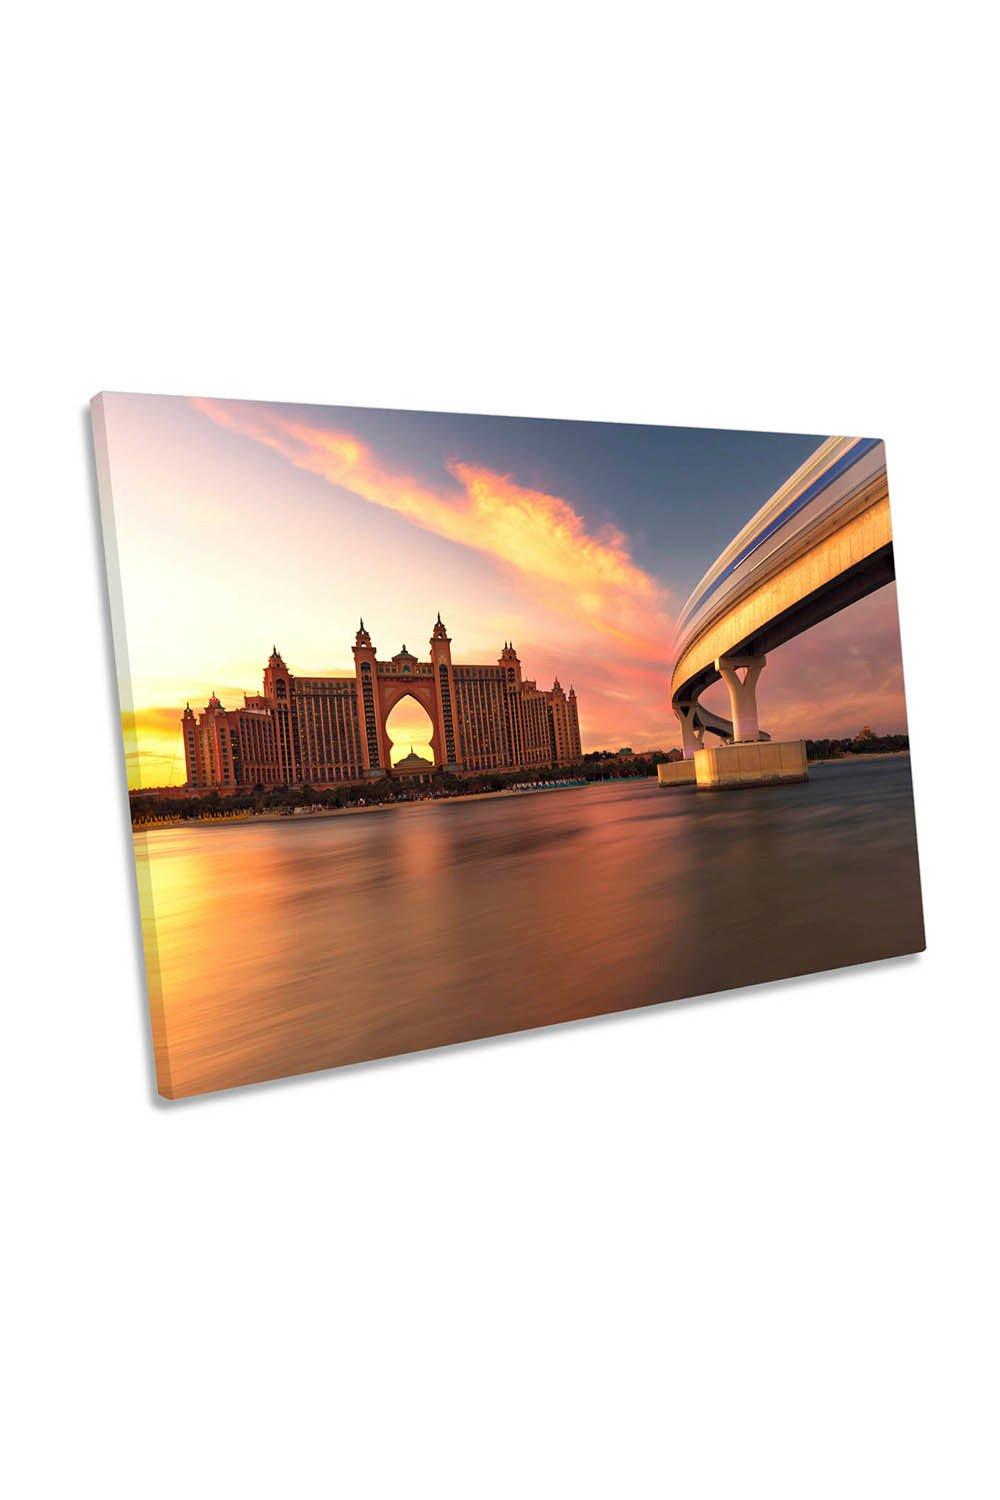 Atlantis Sunset Dubai Bridge Palace Canvas Wall Art Picture Print